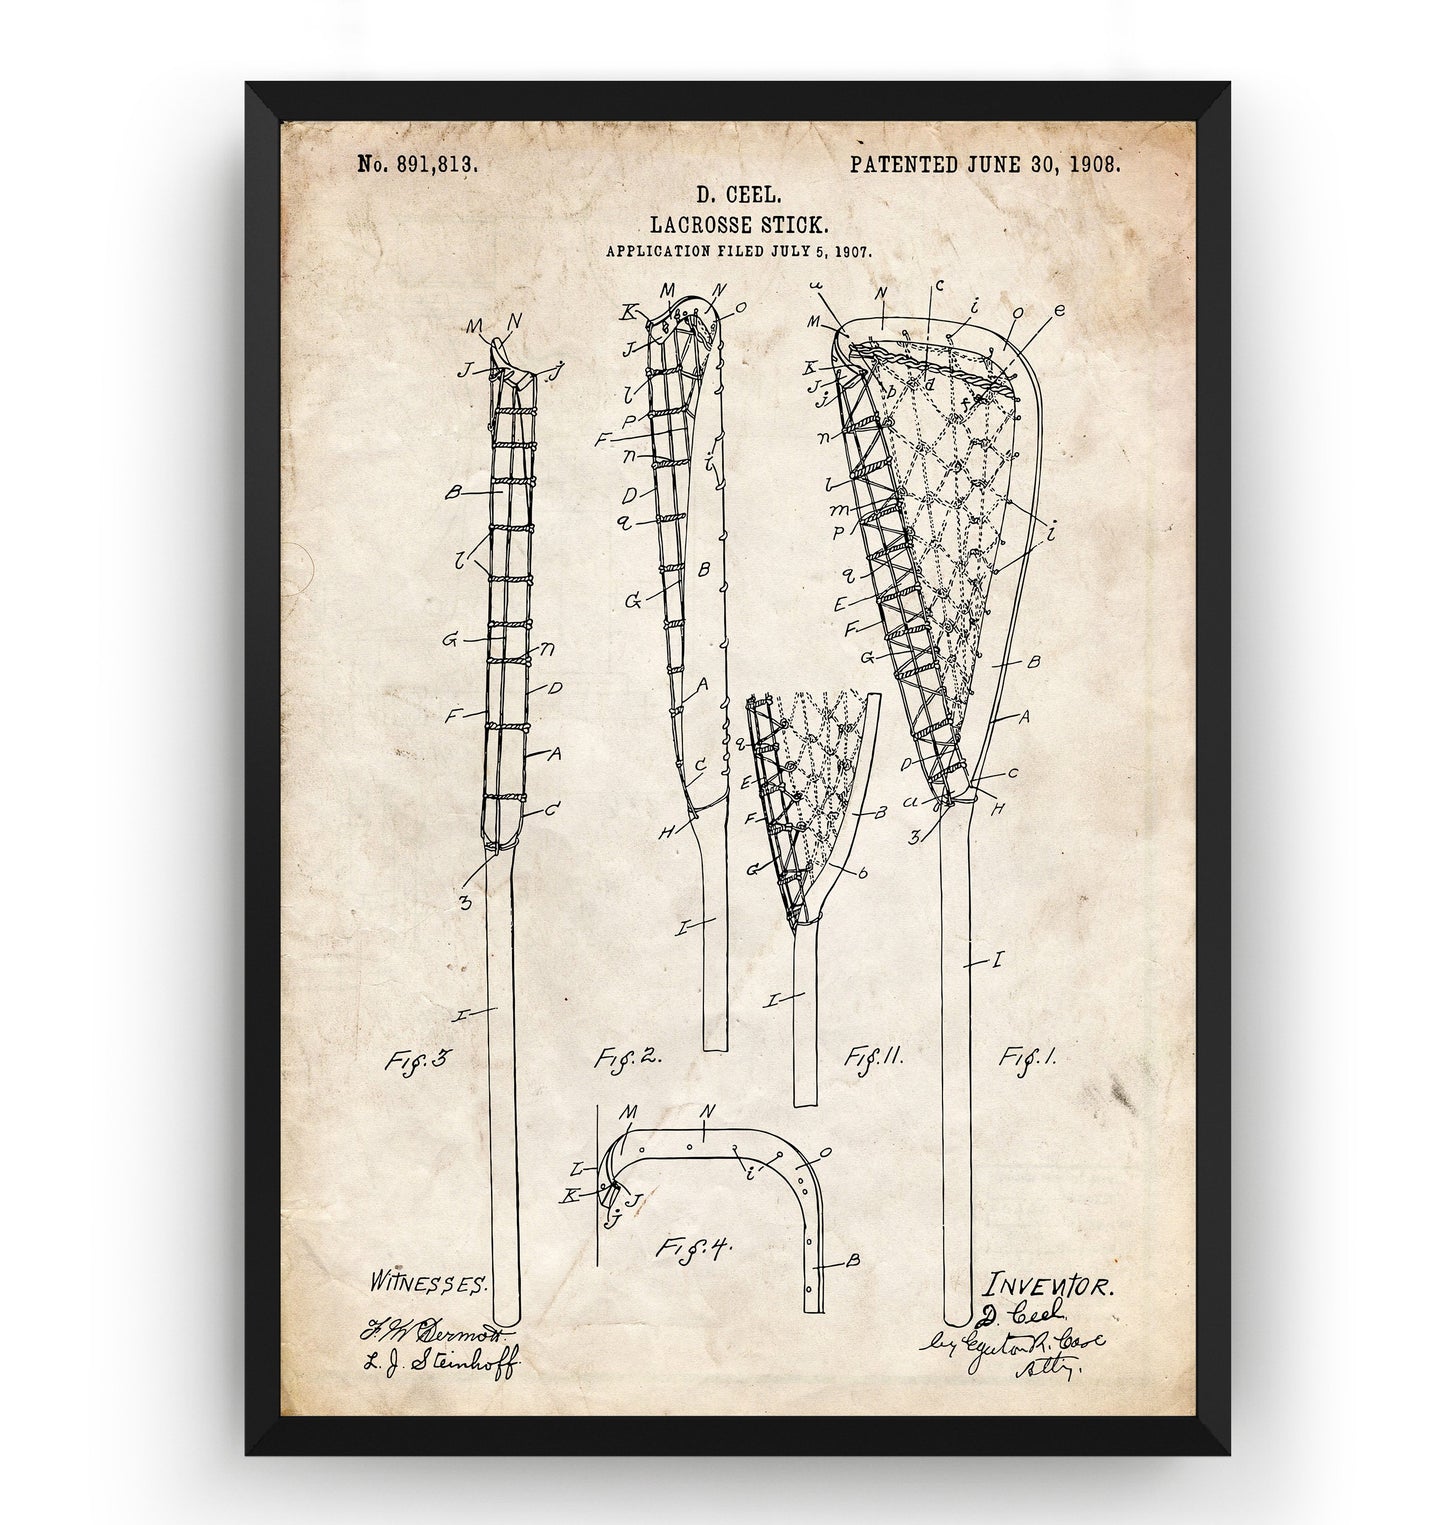 Lacrosse Stick 1908 Patent Print - Magic Posters